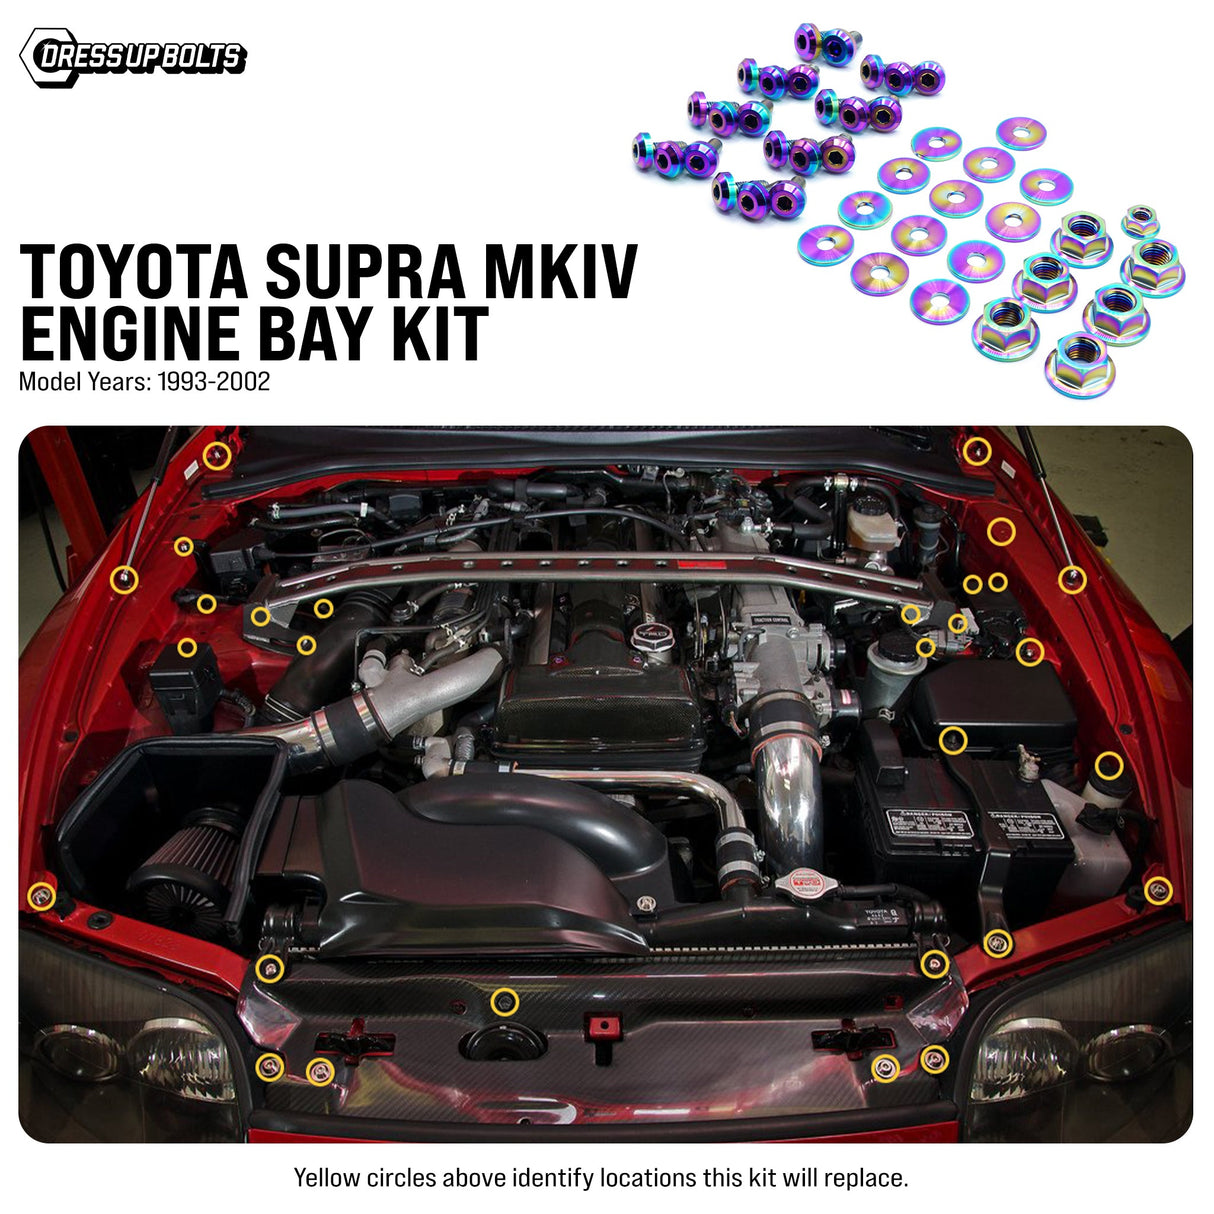 Dress Up Bolts Titanium Engine Bay Kit - Toyota Supra MKIV (1993-2002)